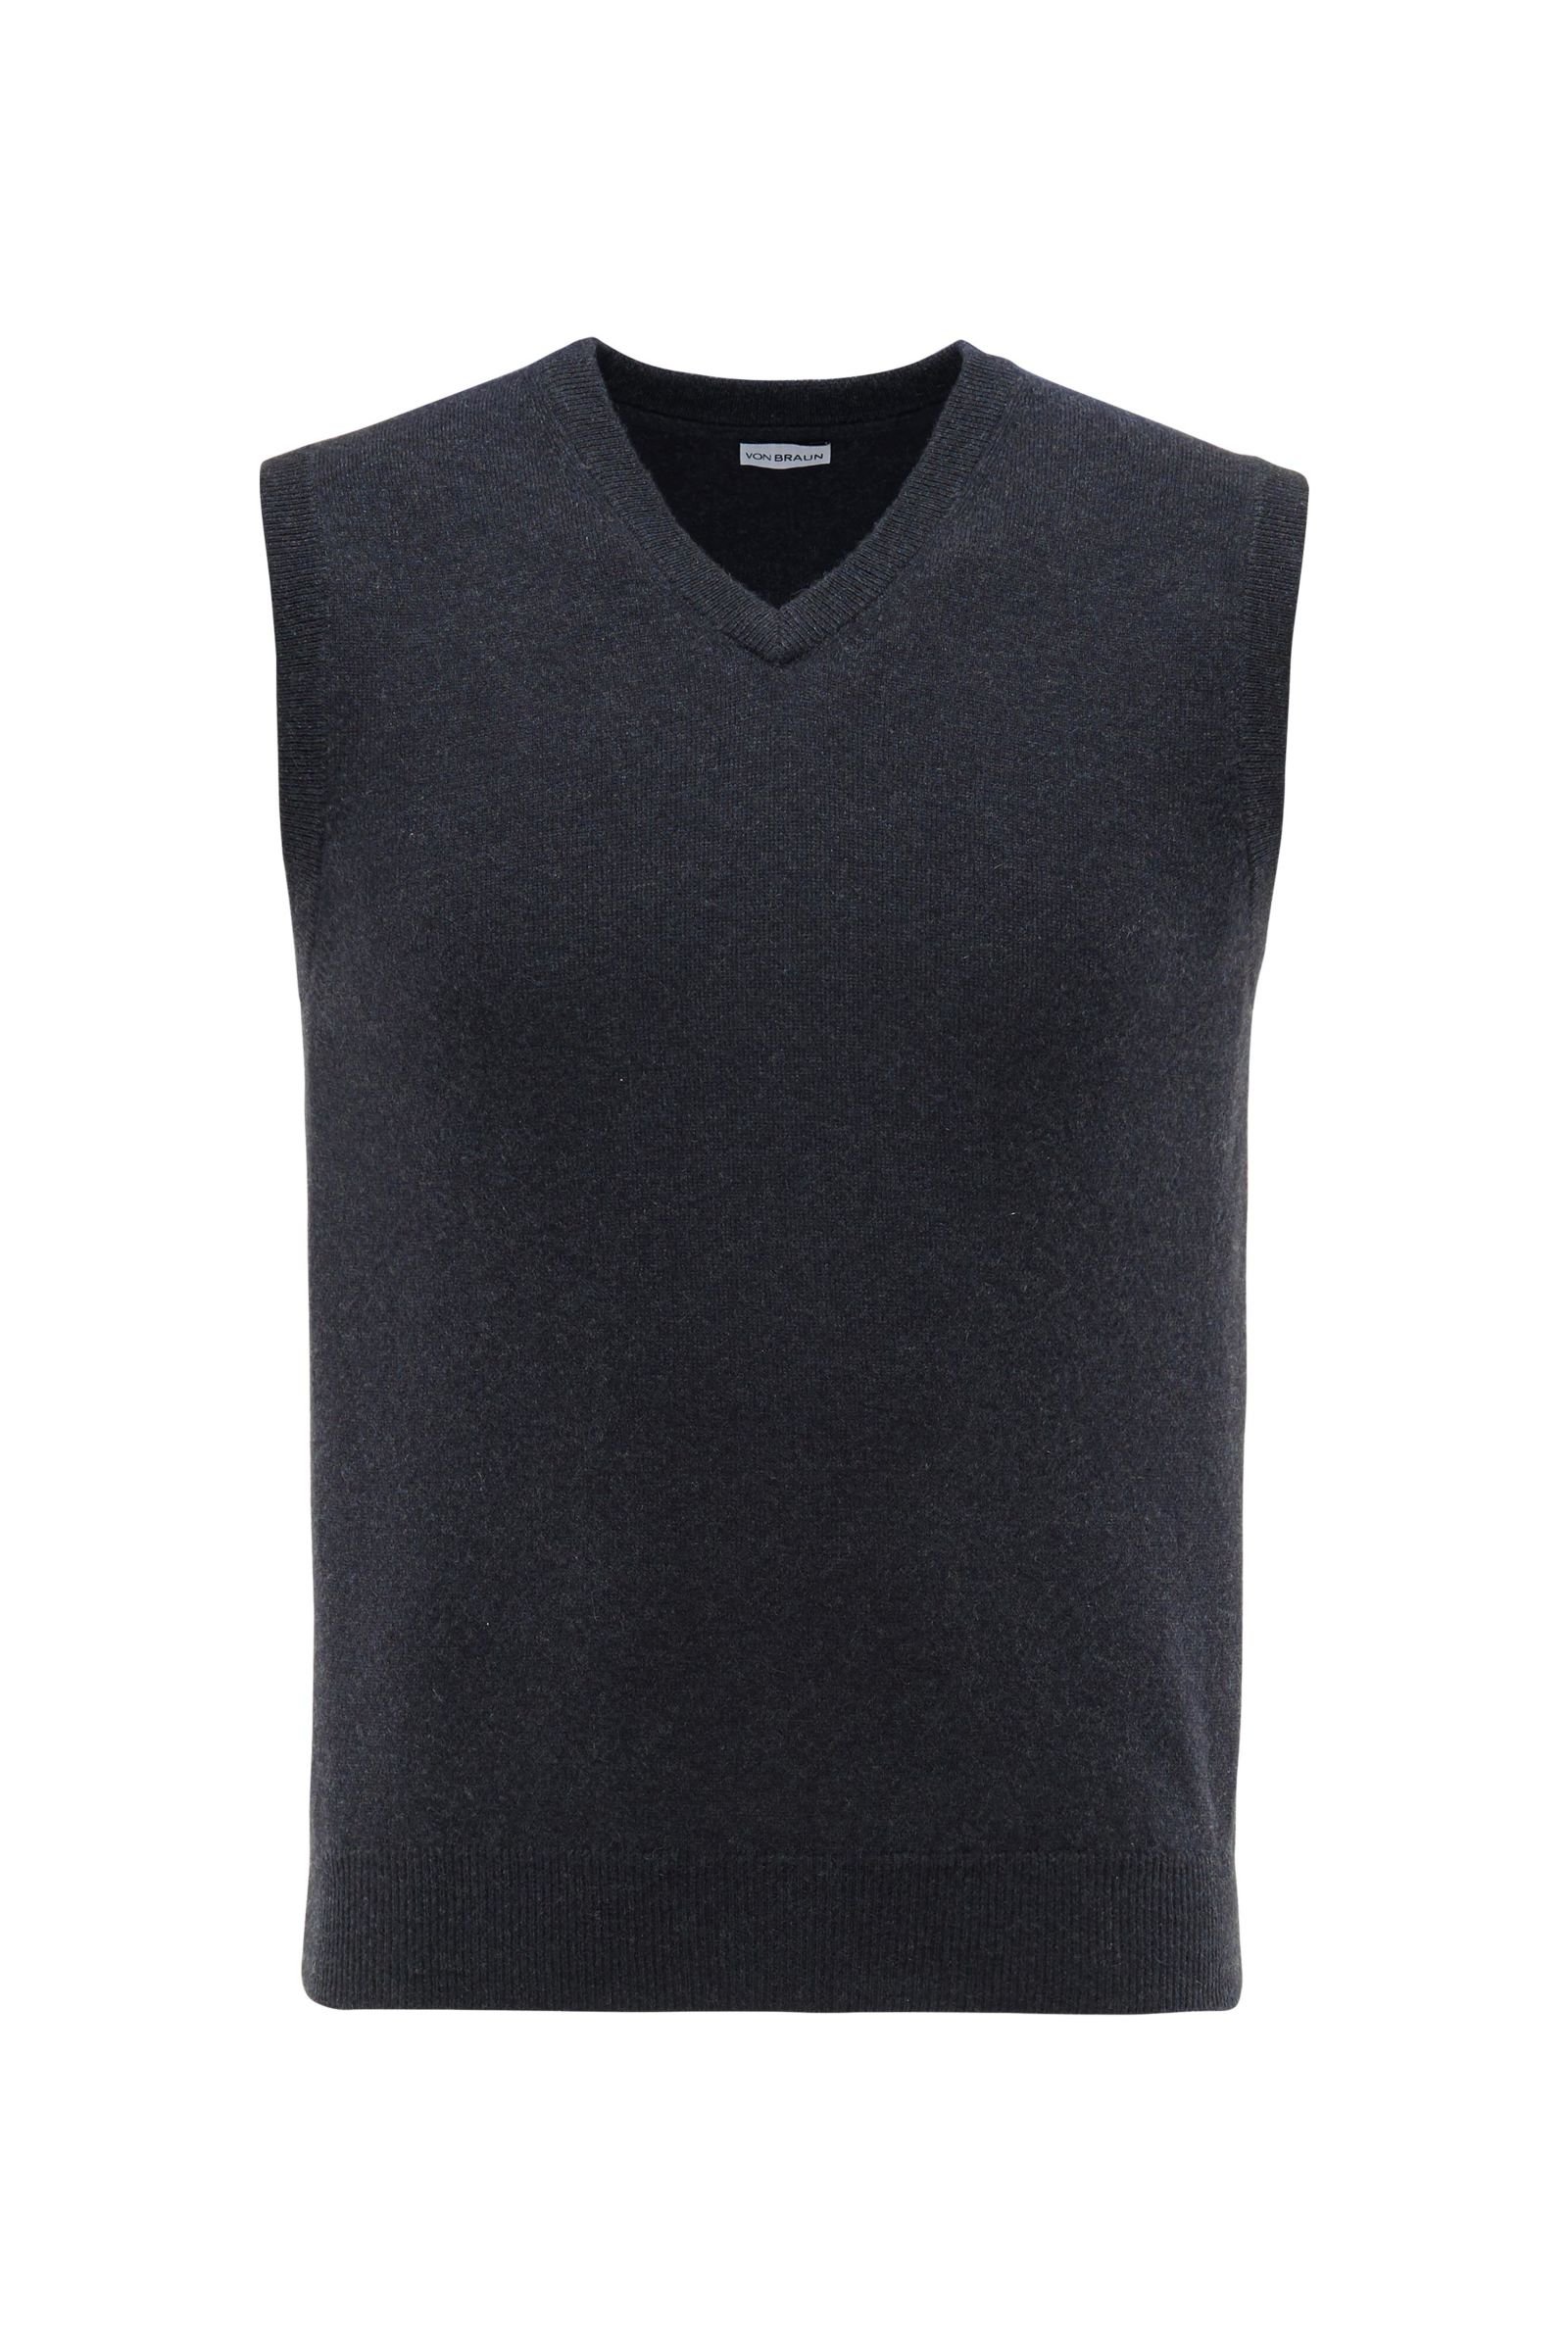 Cashmere V-neck sweater vest anthracite